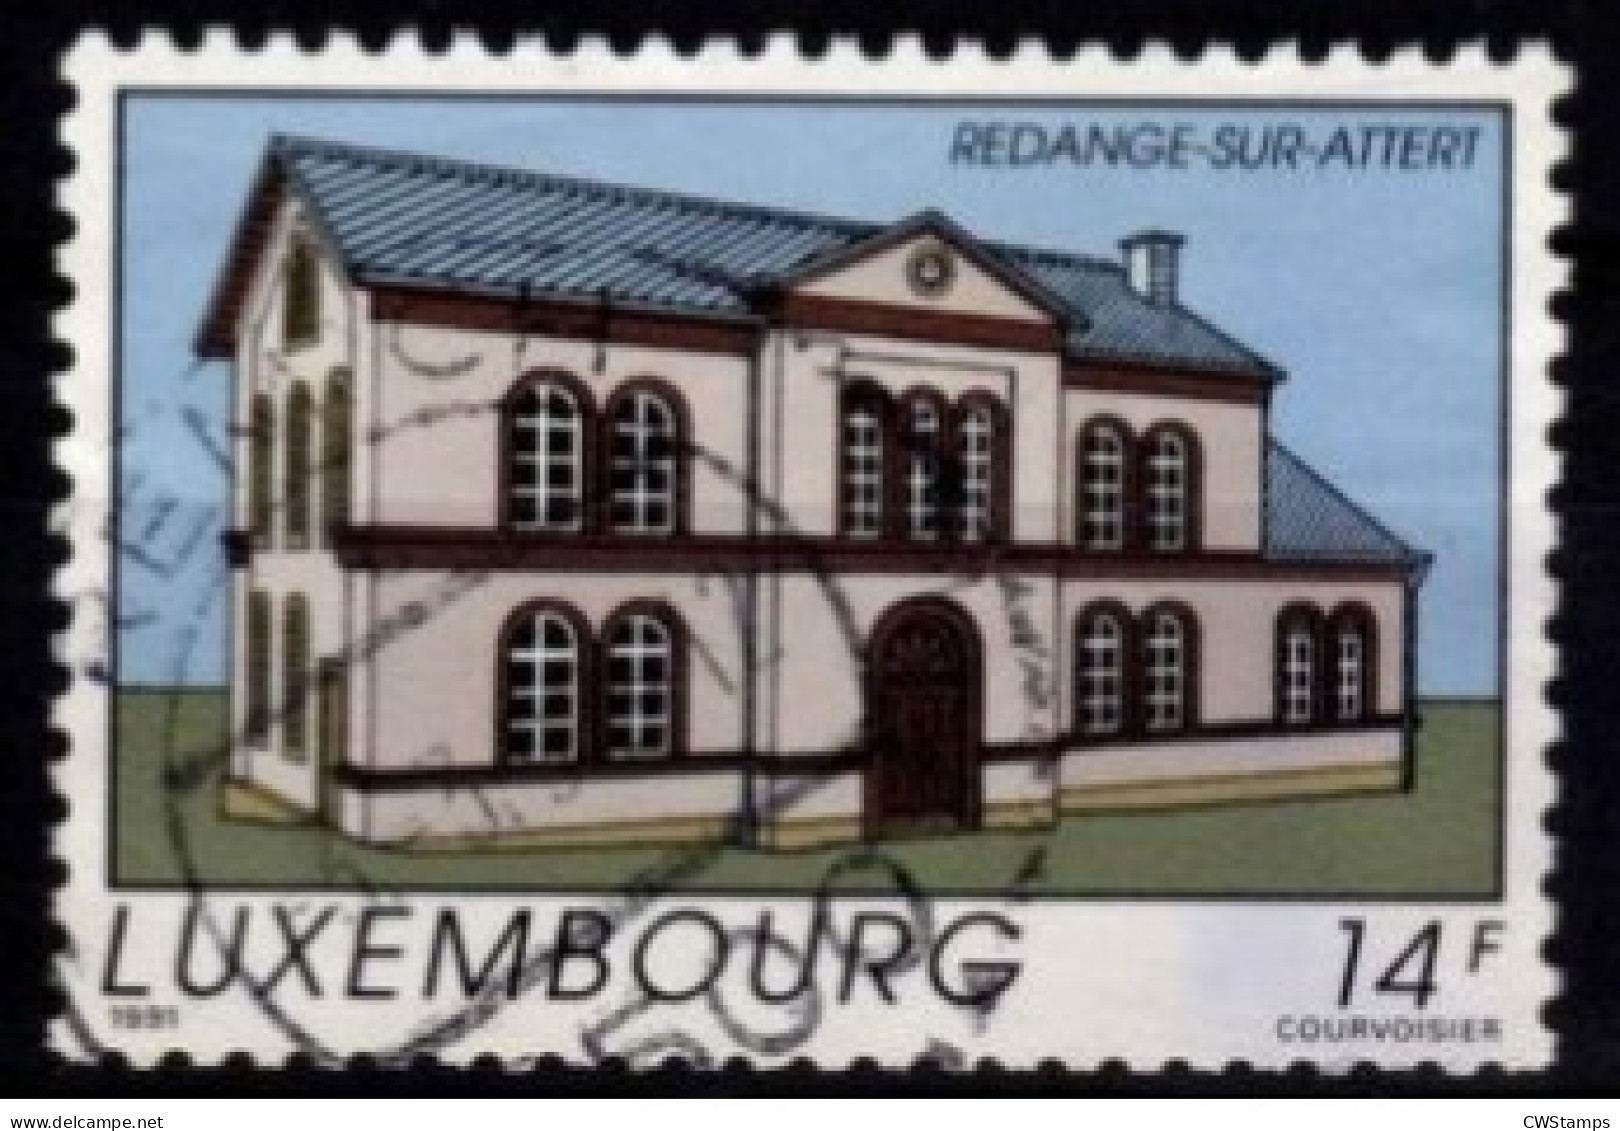 Luxemburg 1991      Mi 1274 - Used Stamps